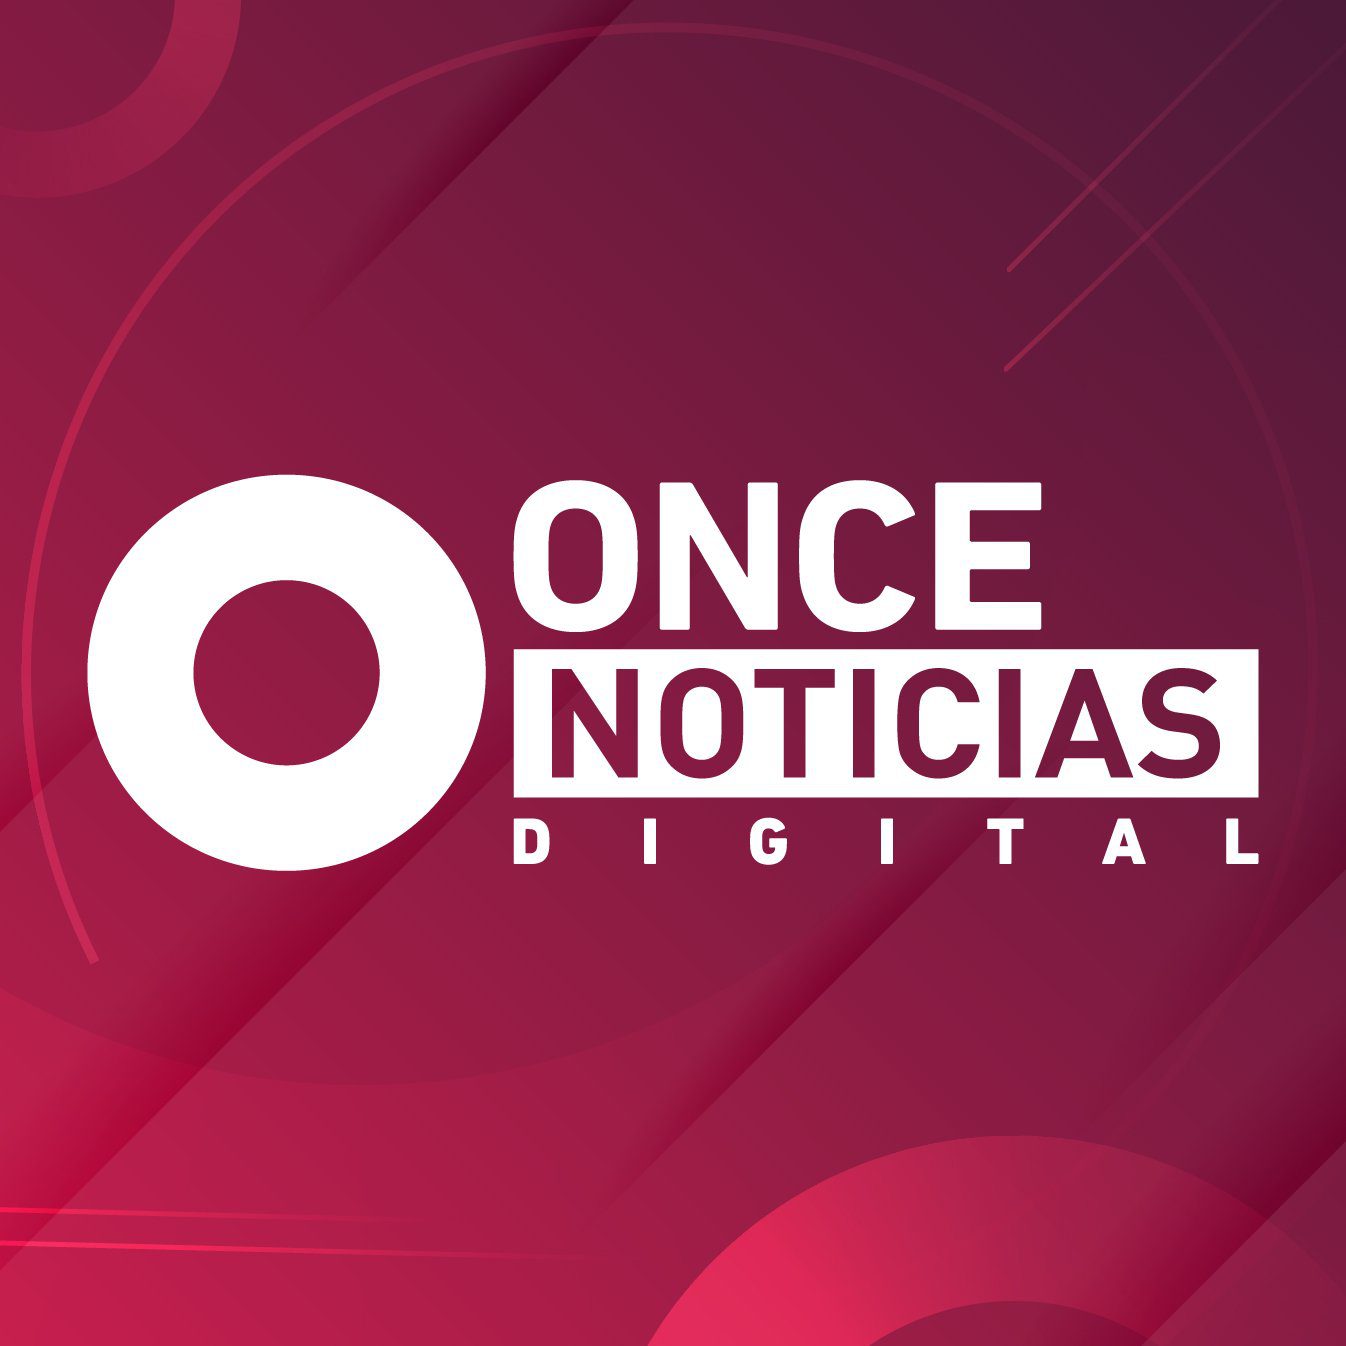 (c) Oncenoticias.digital